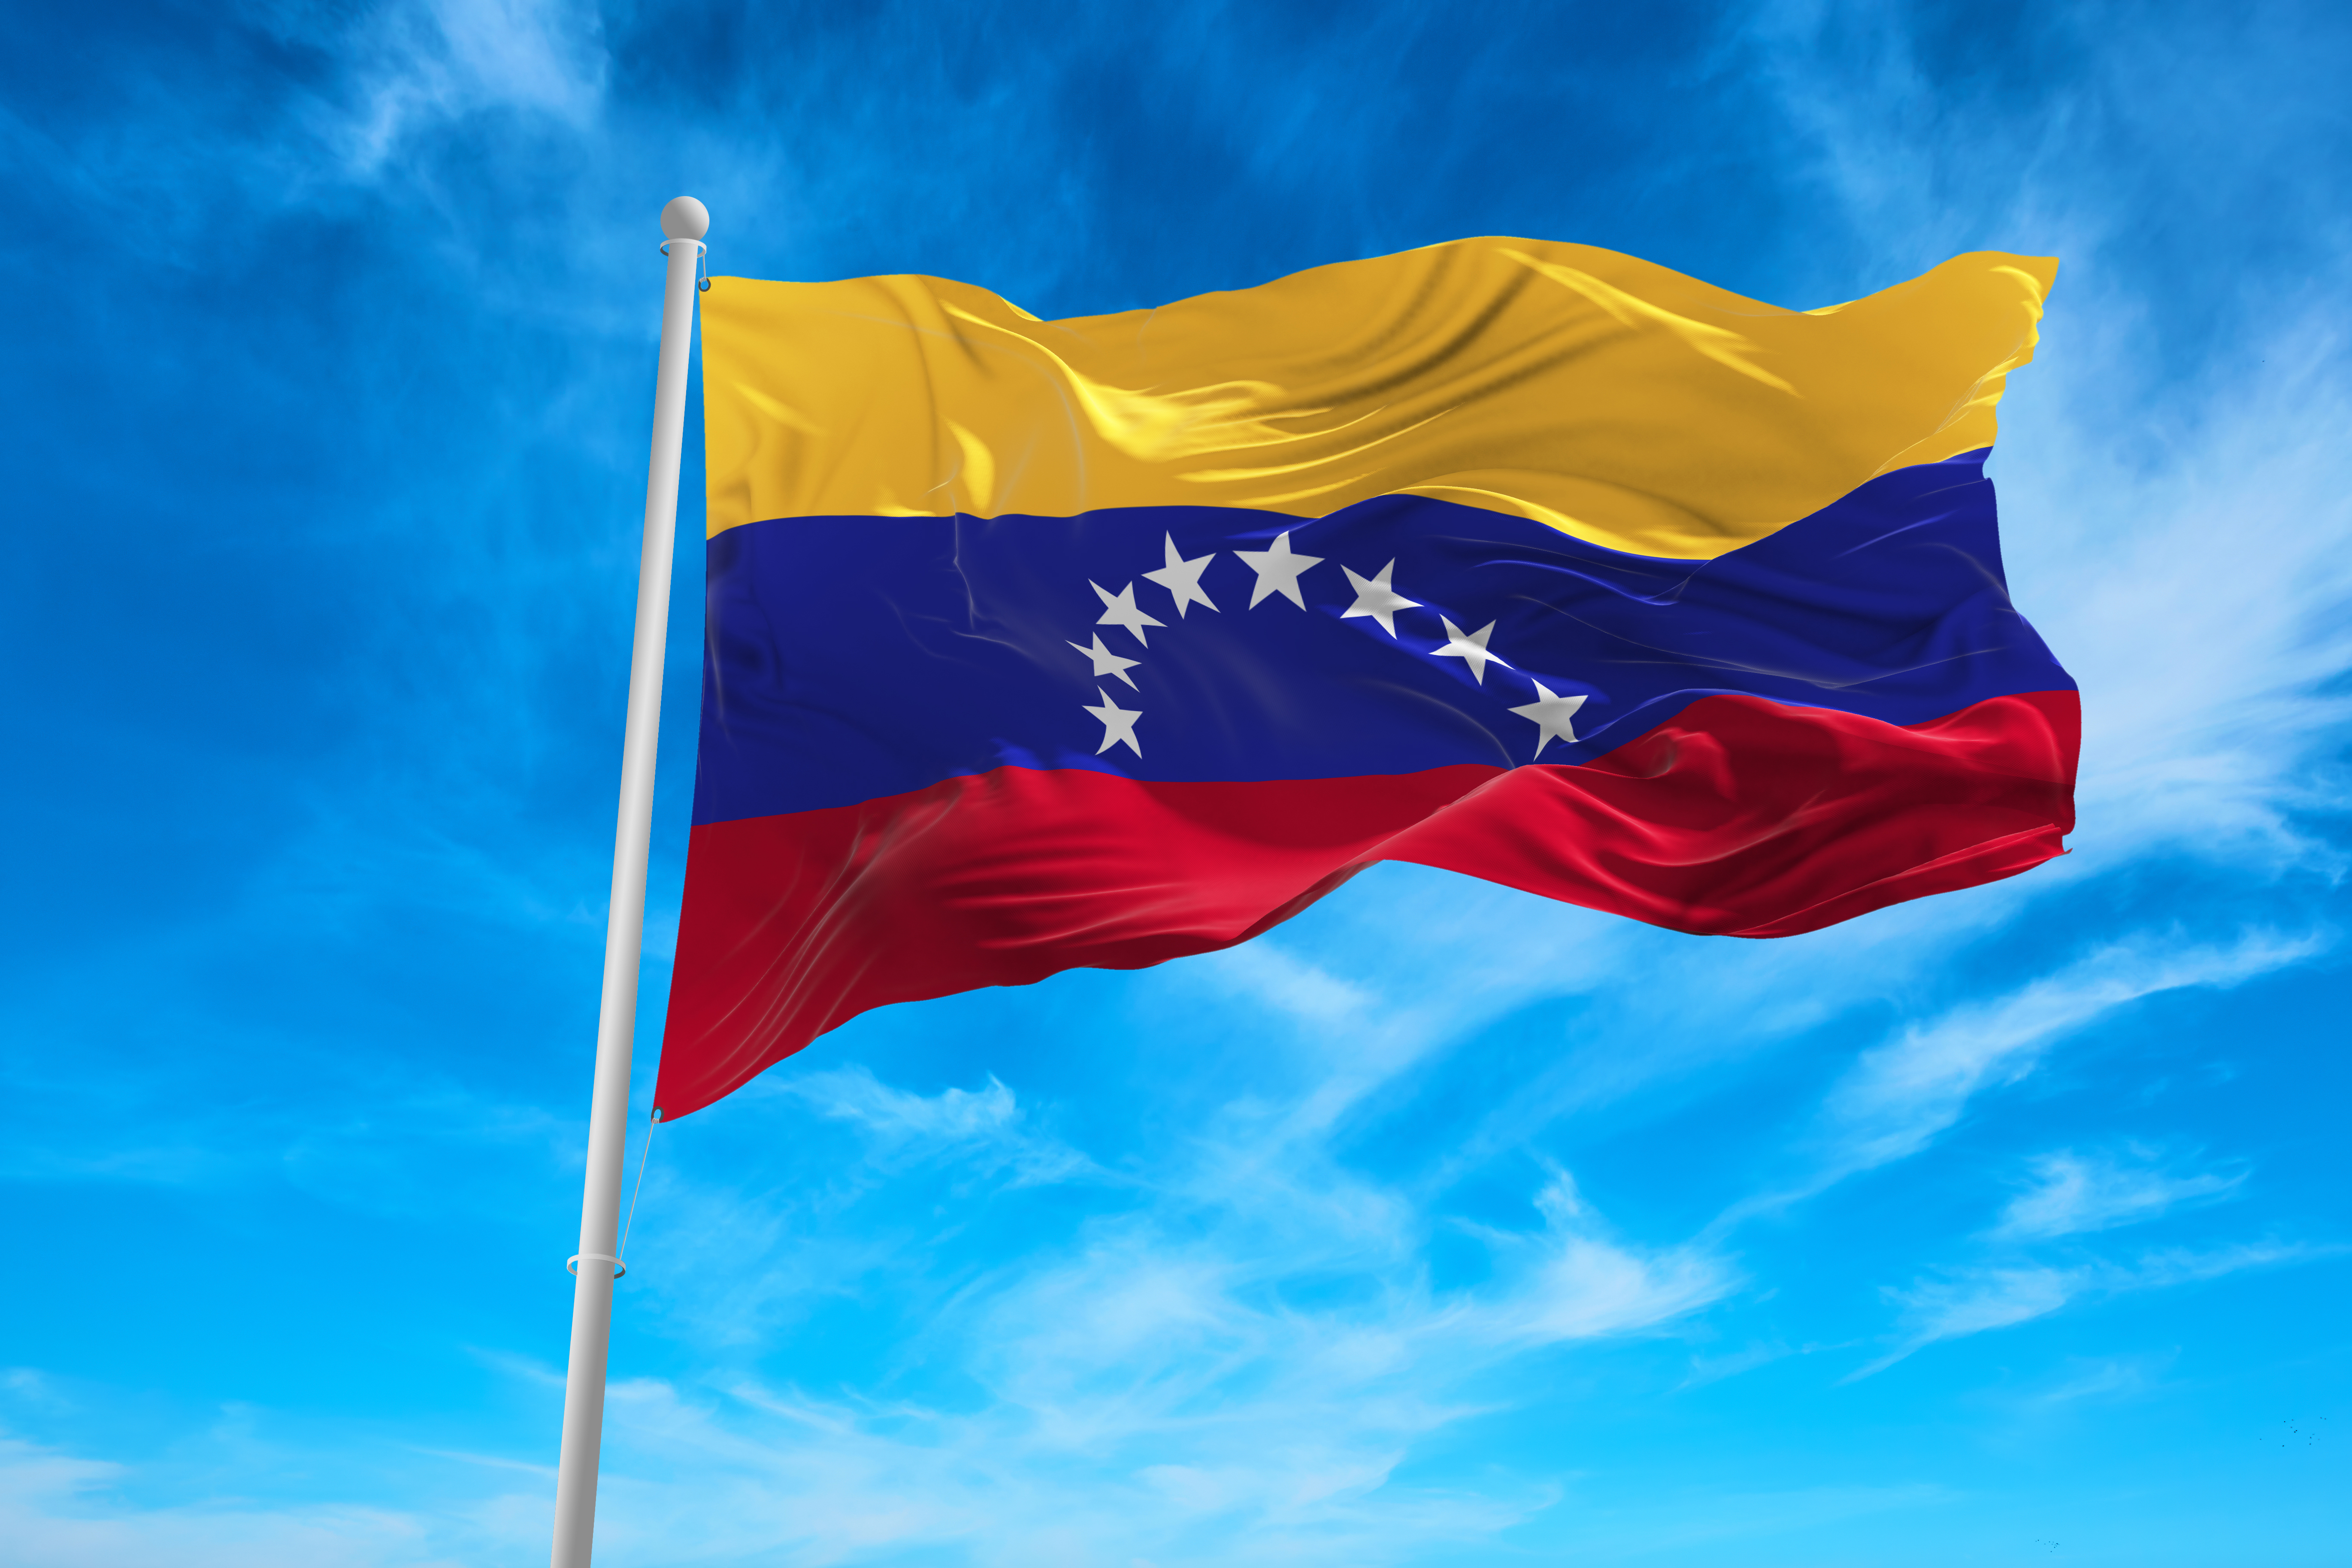 The flag symbolizes Venezuelan citizenship